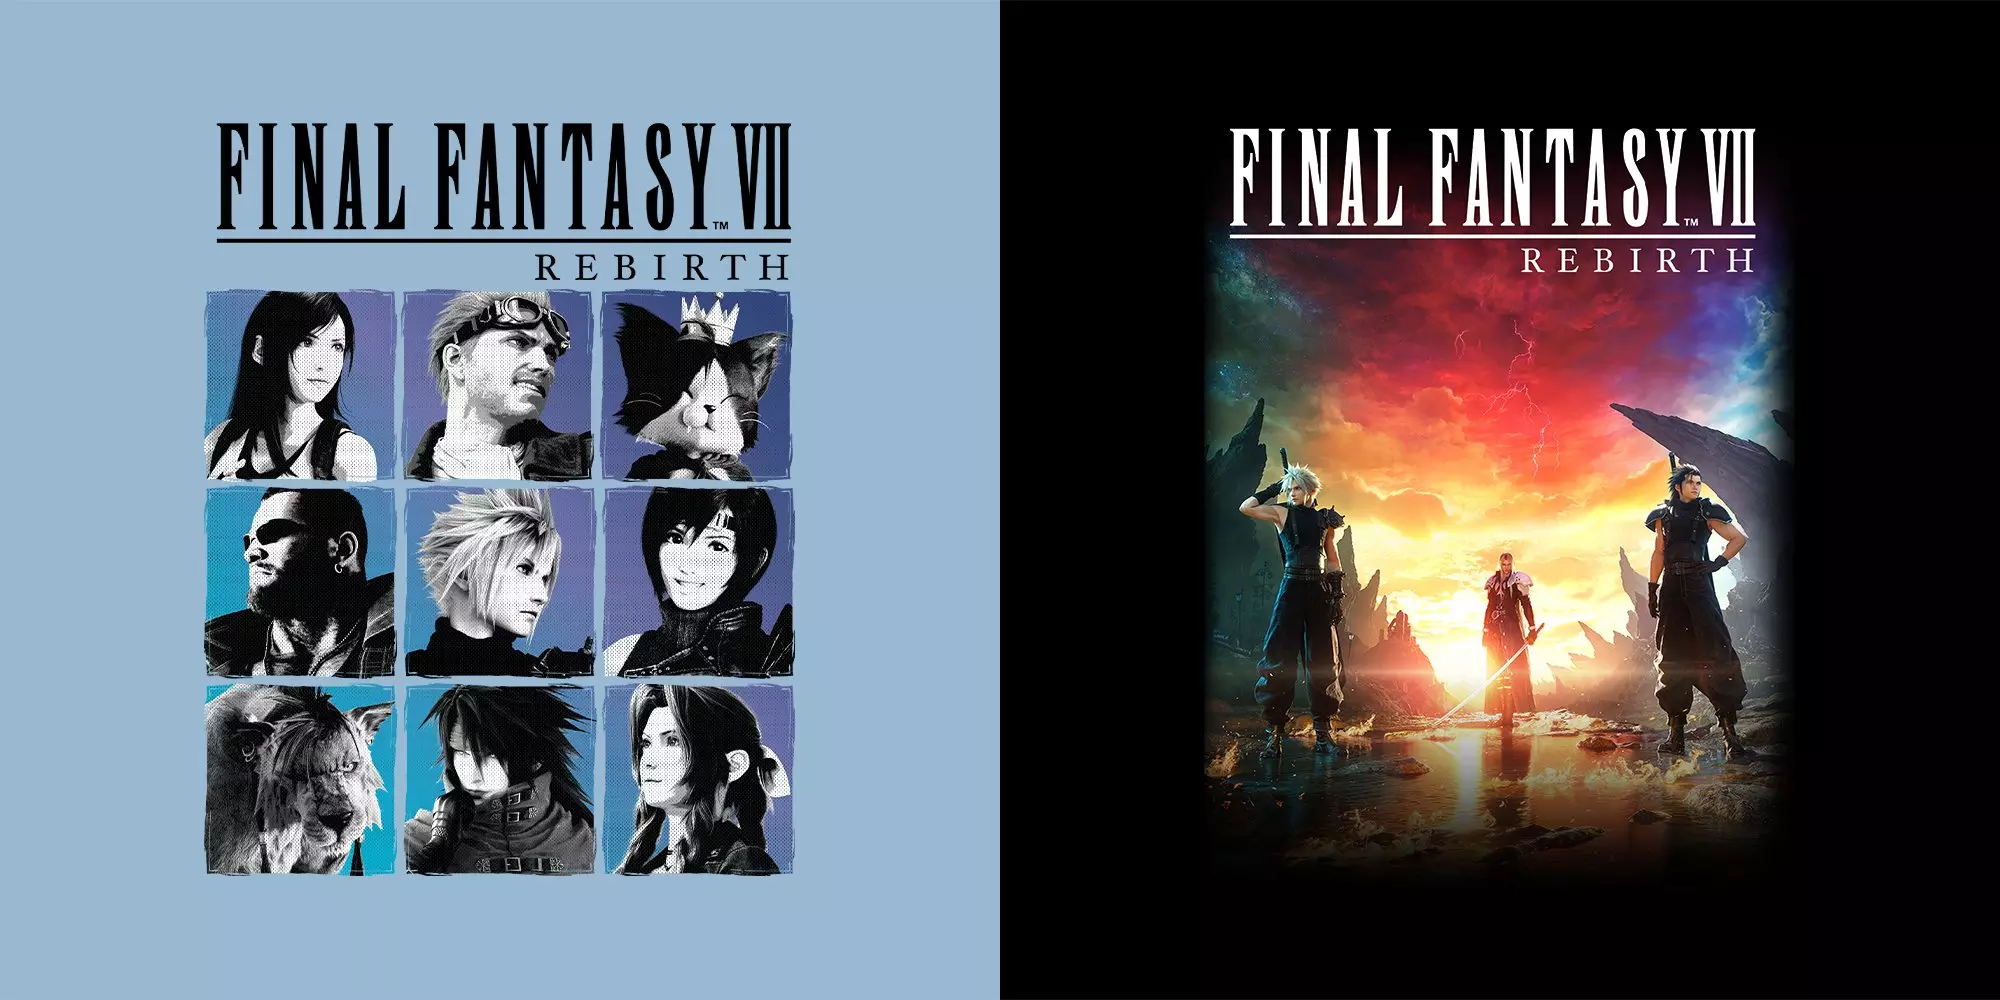 Gear up for Final Fantasy VII Rebirth